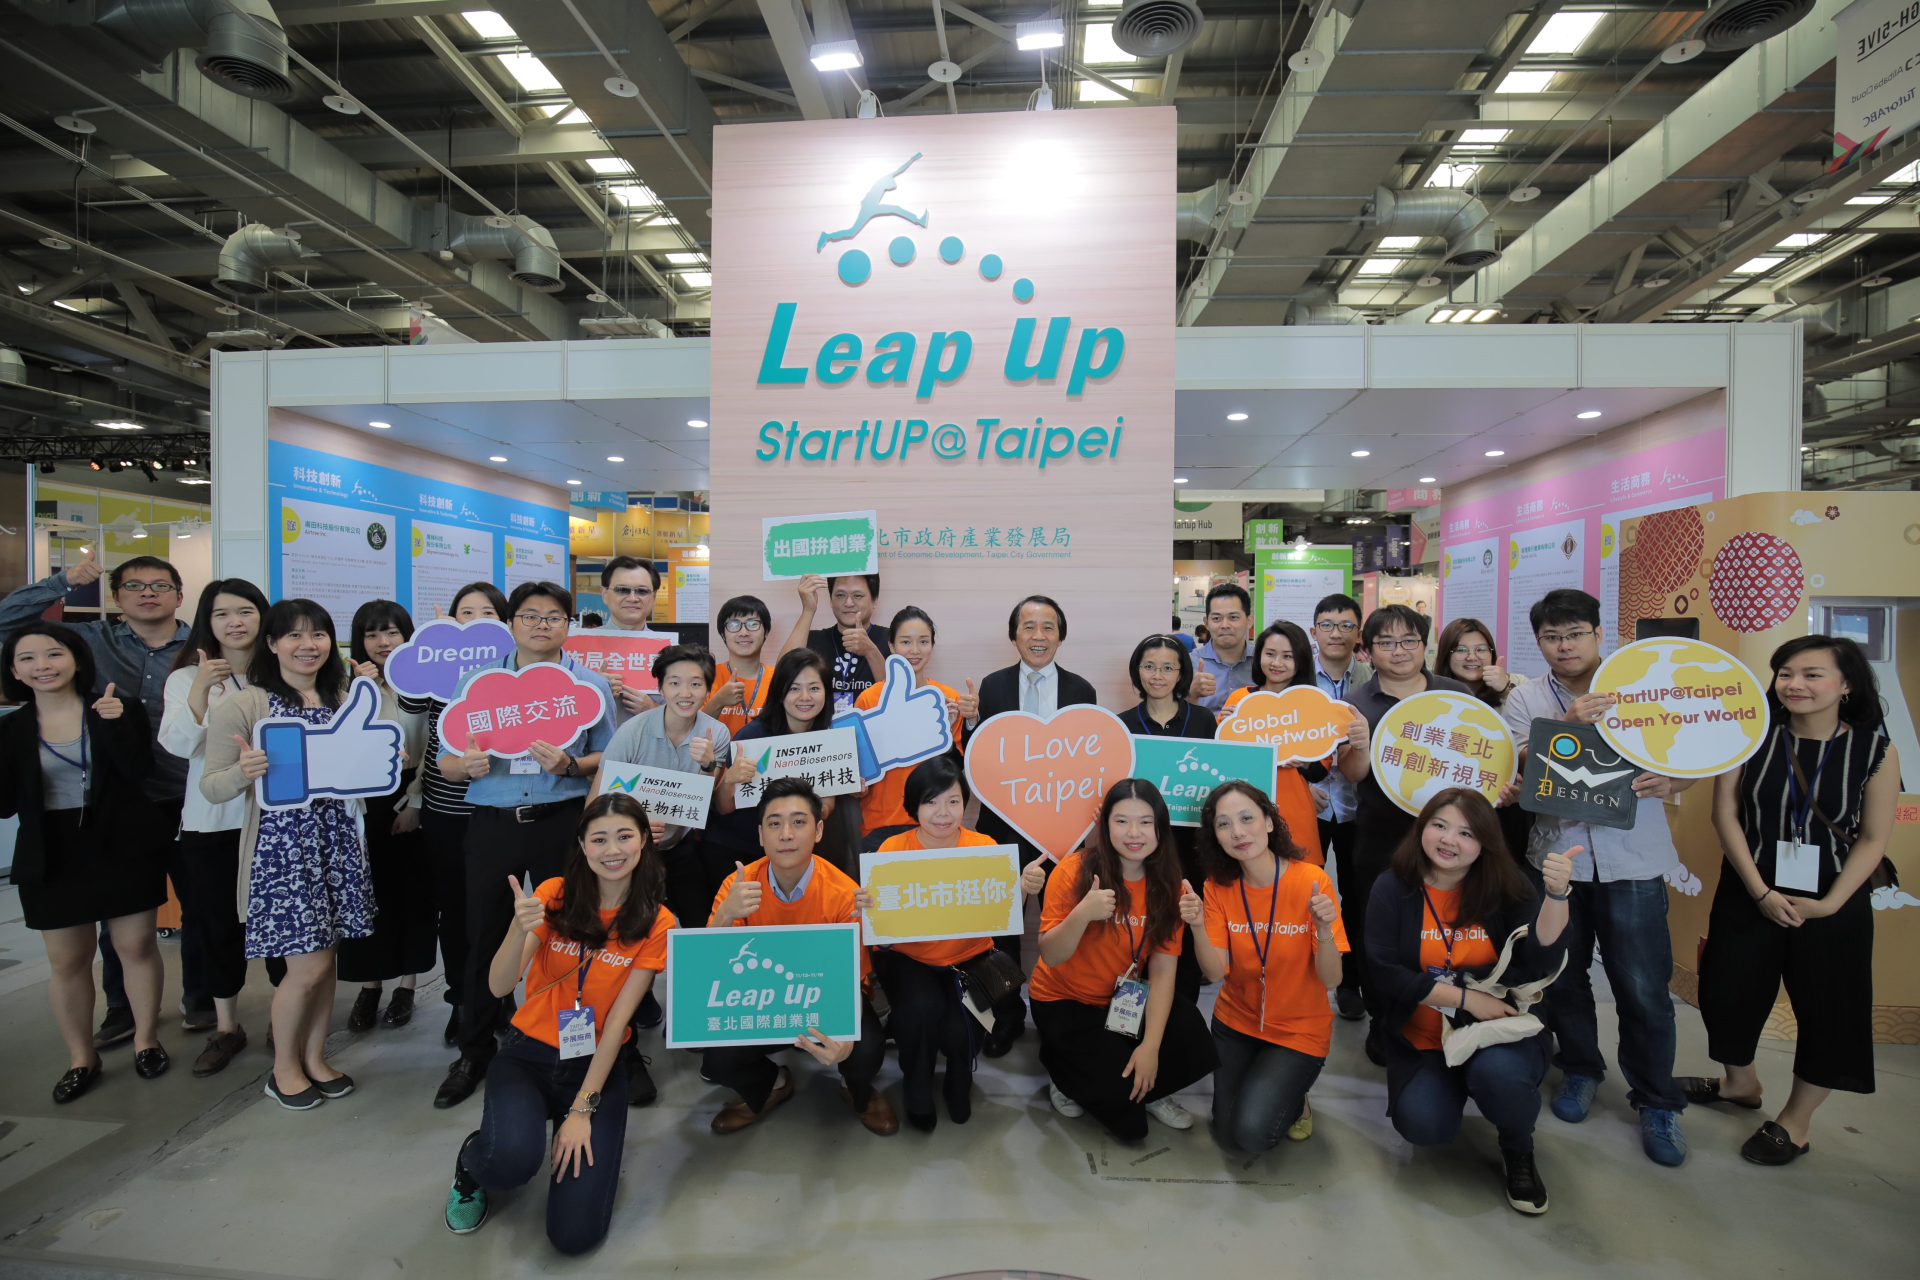 Taipei International Startup Week - Leap Up! Opening Up New Horizons